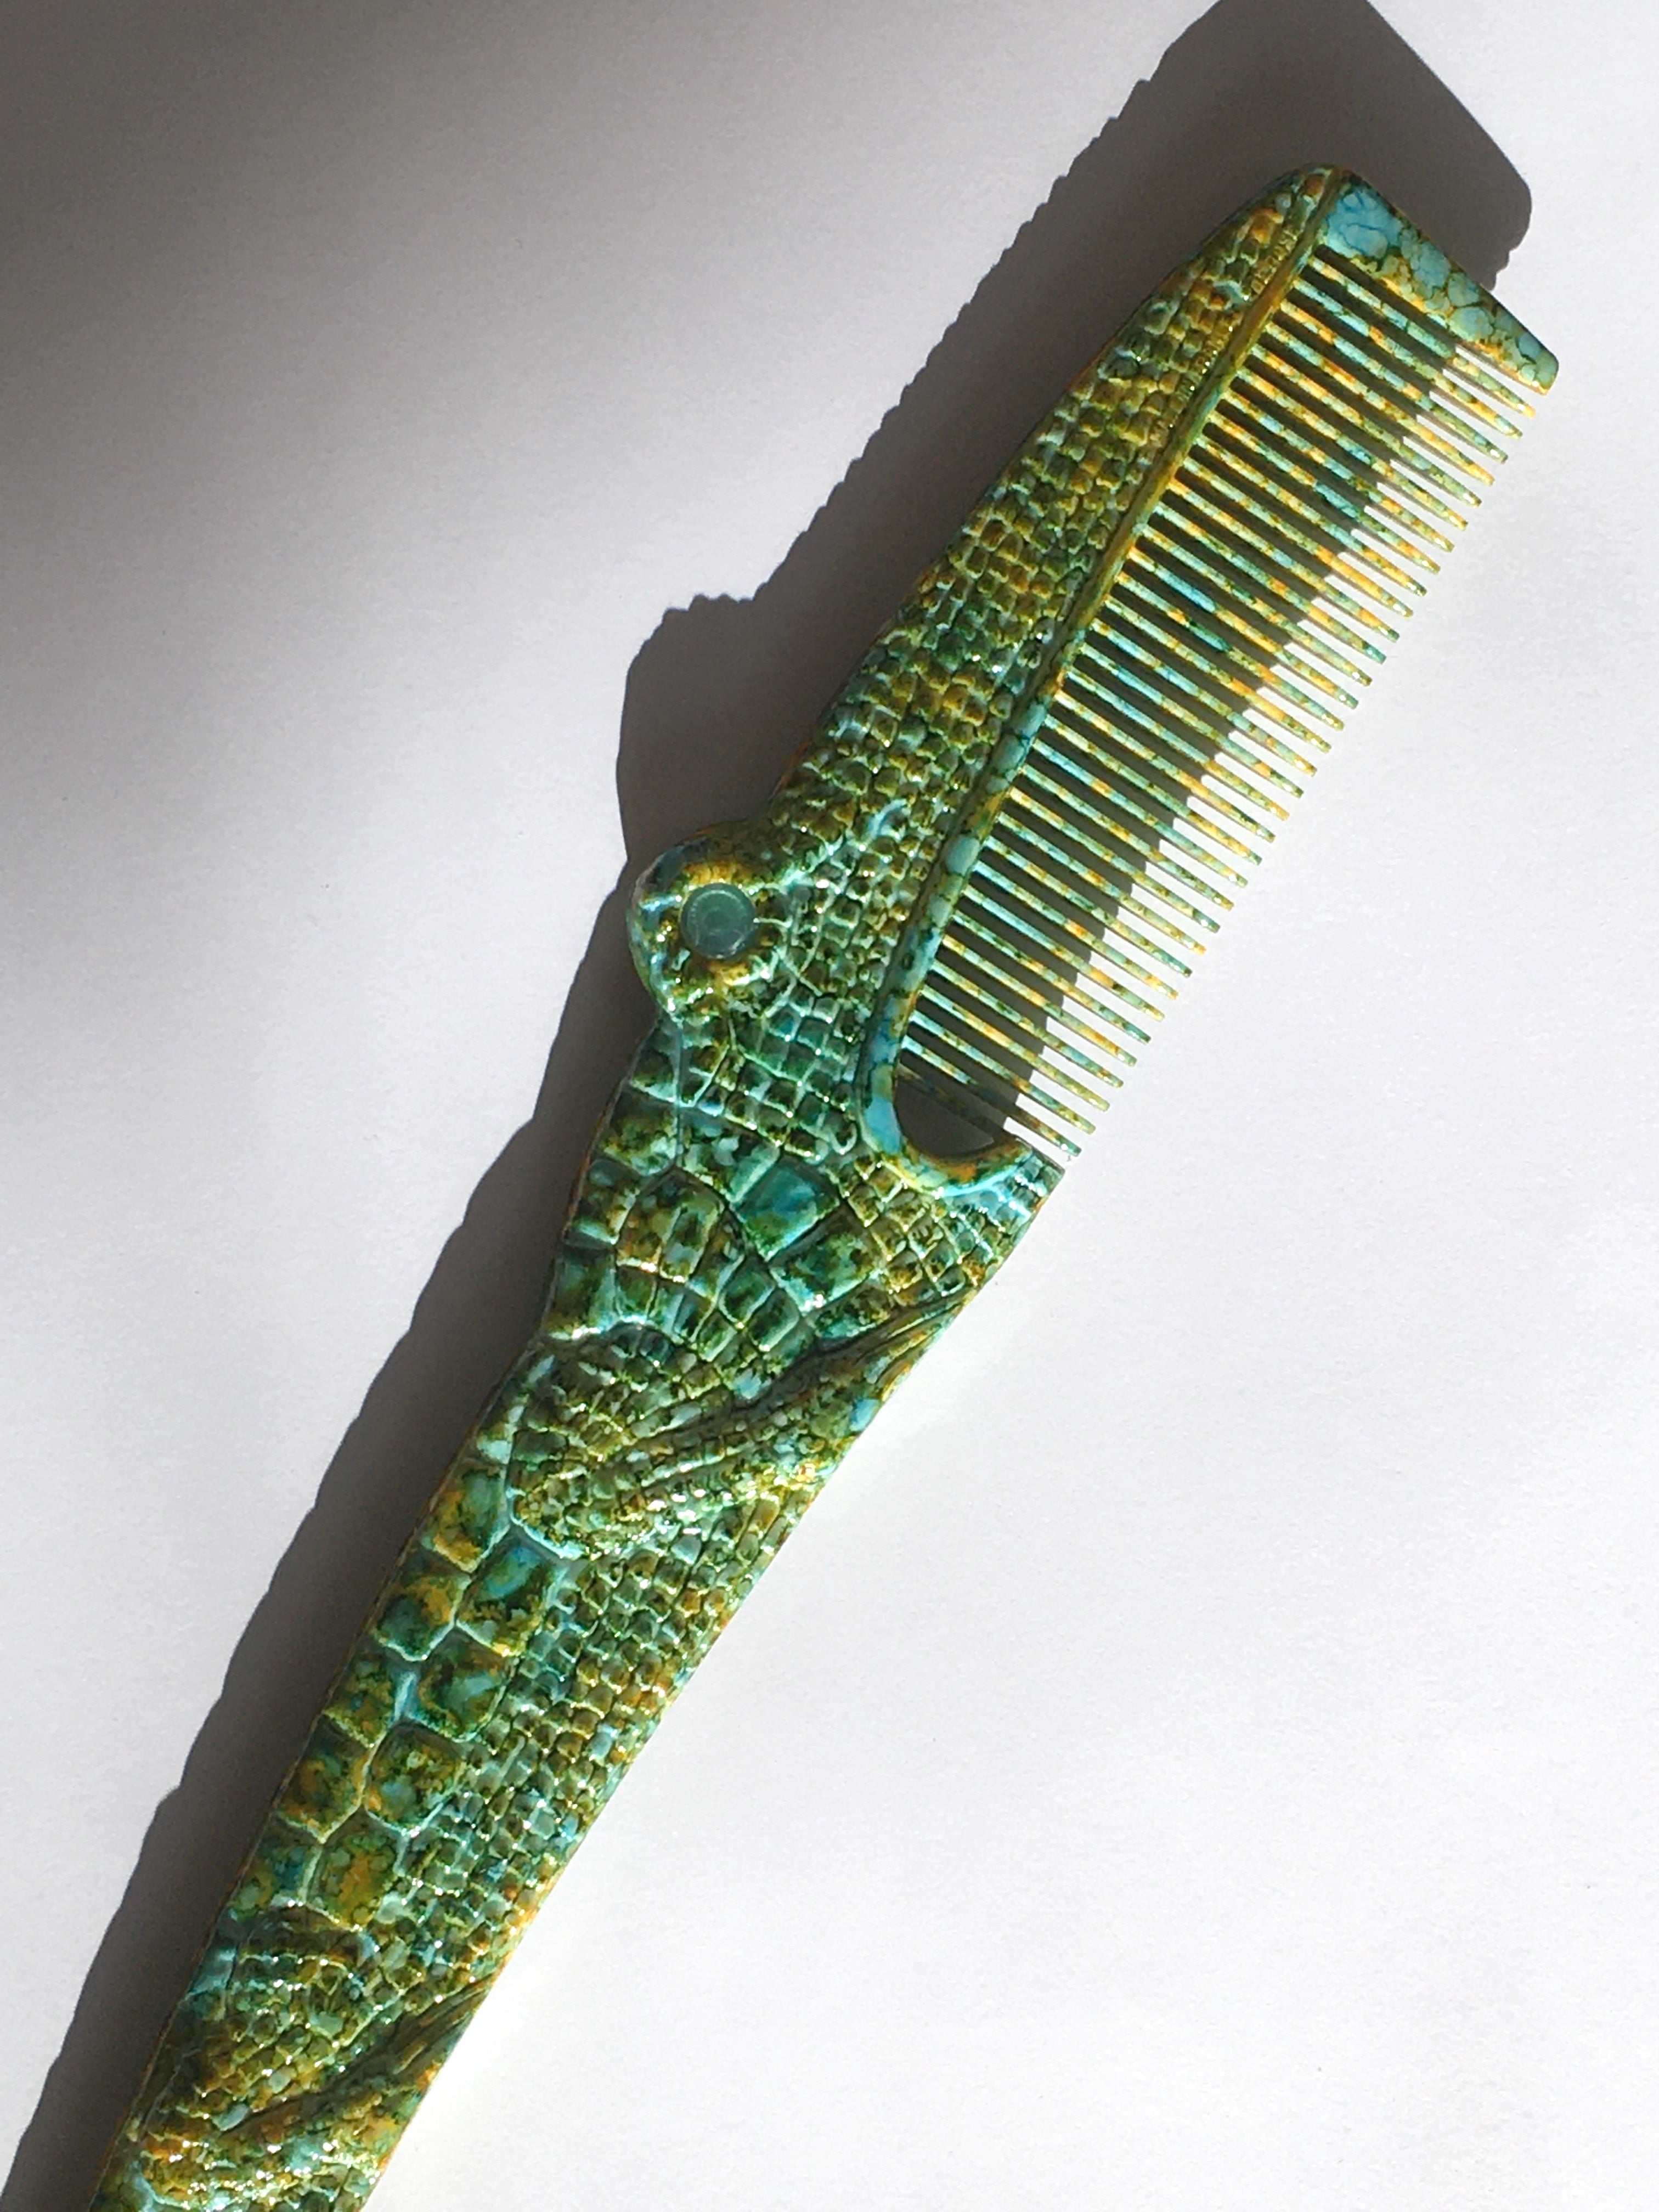 Vintage comb - Crocodile